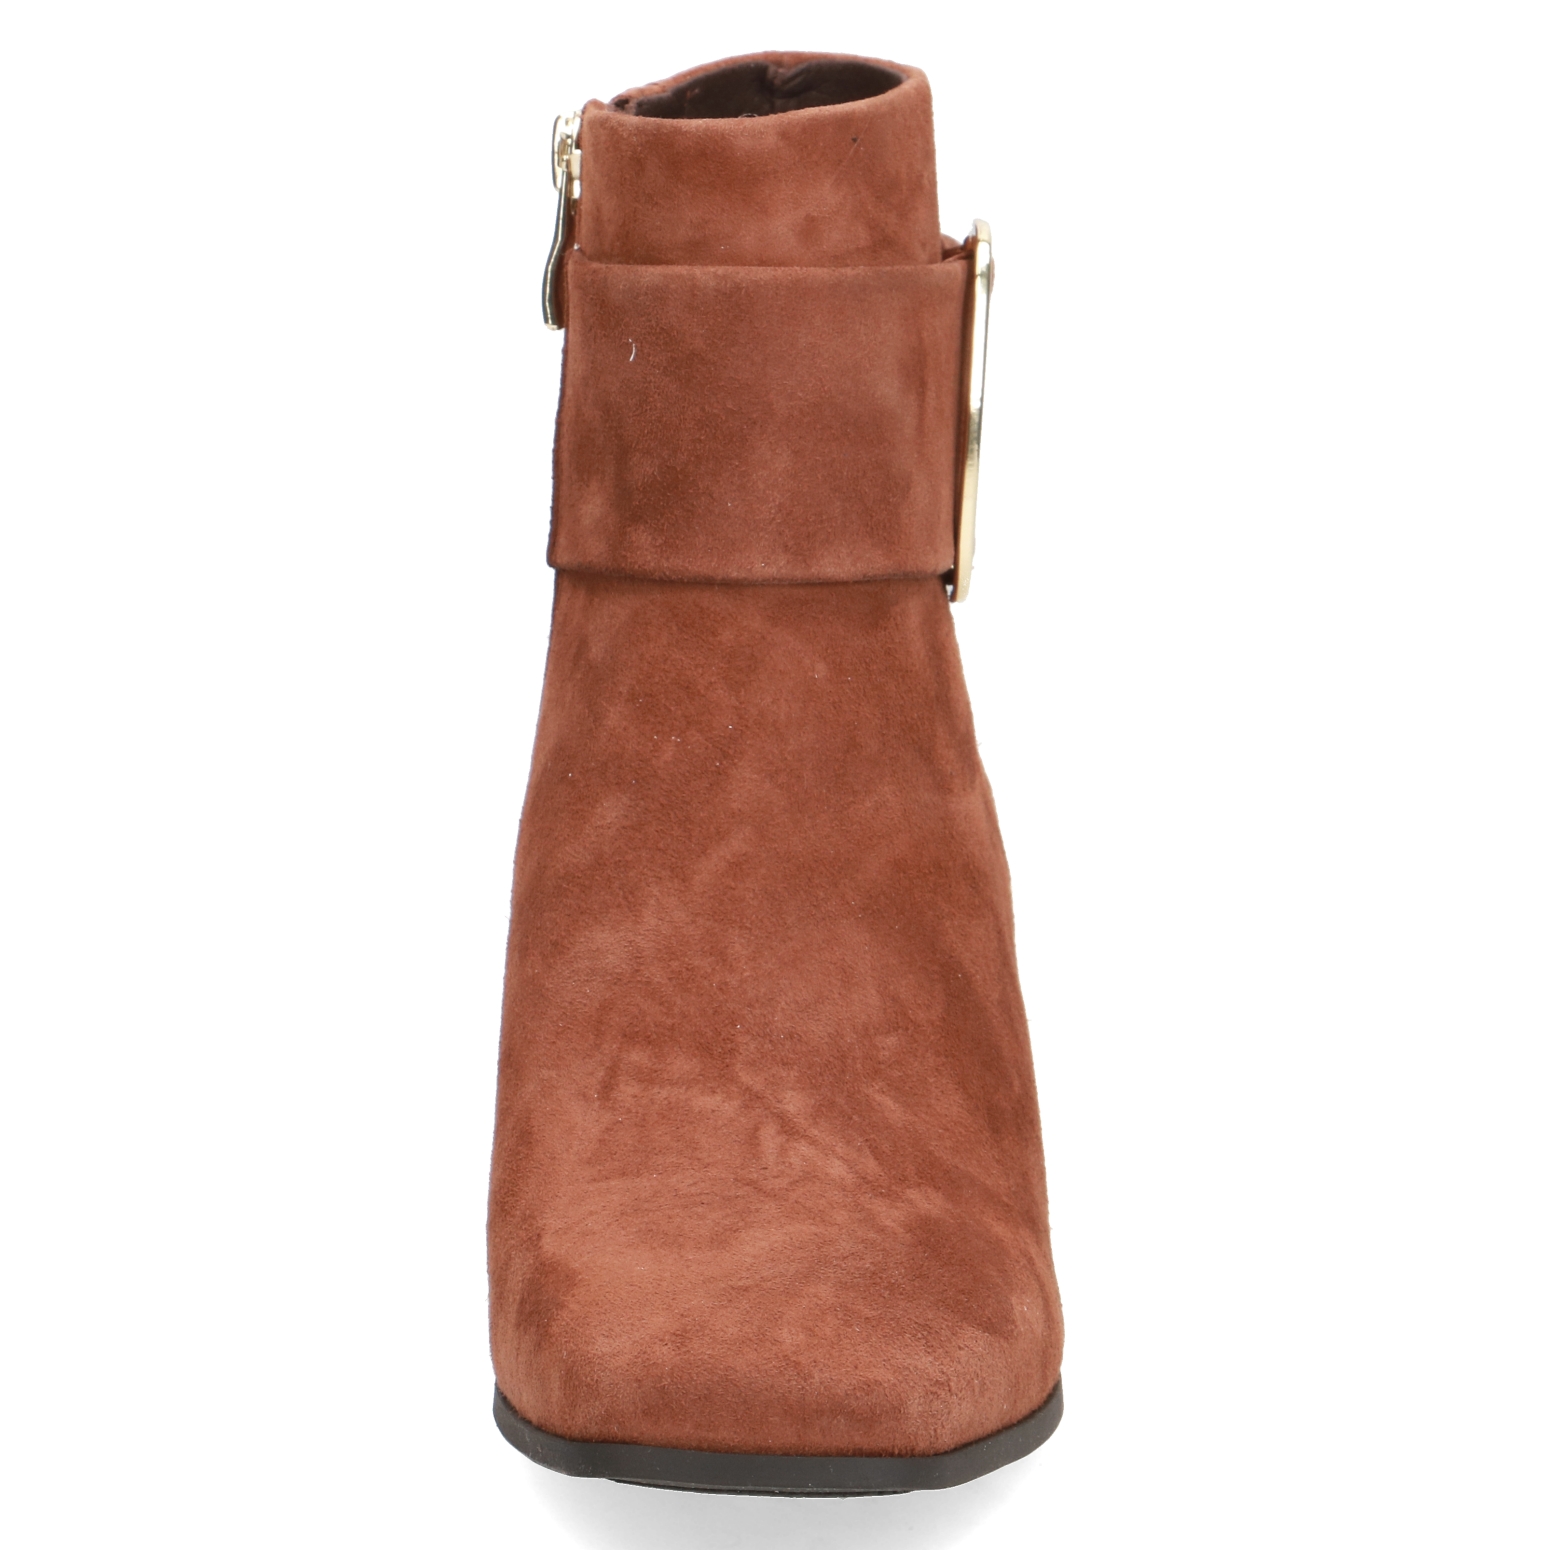 Caprice Stiefelette - Brown Nubuck leather